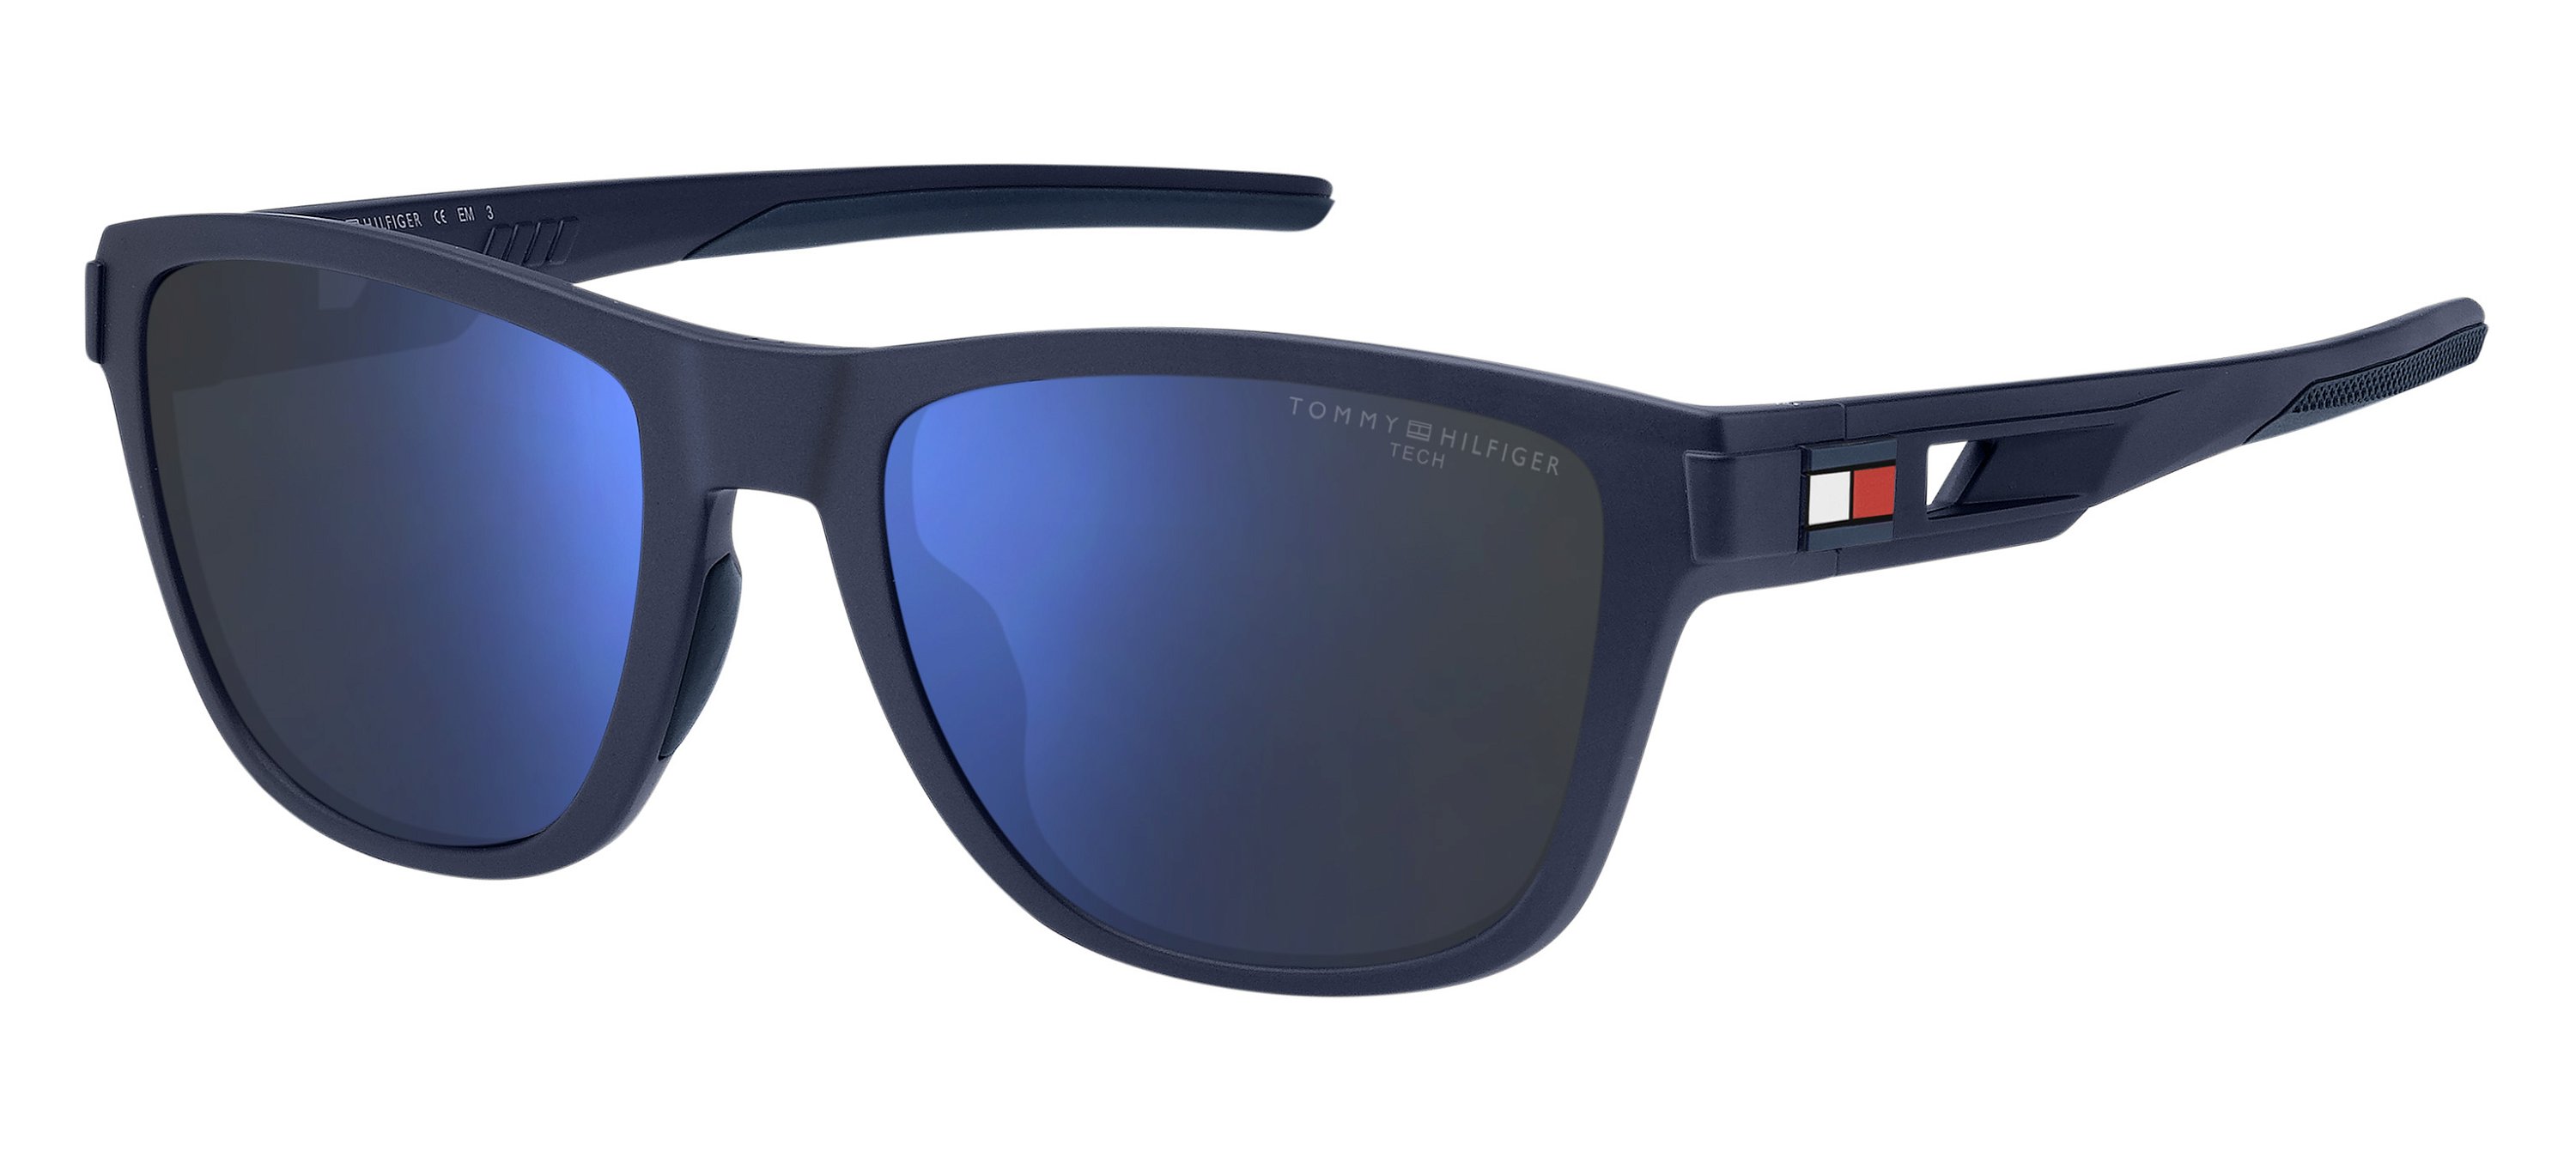 Tommy Hilfiger Sonnenbrille TH 1951/S R7W blau metallic